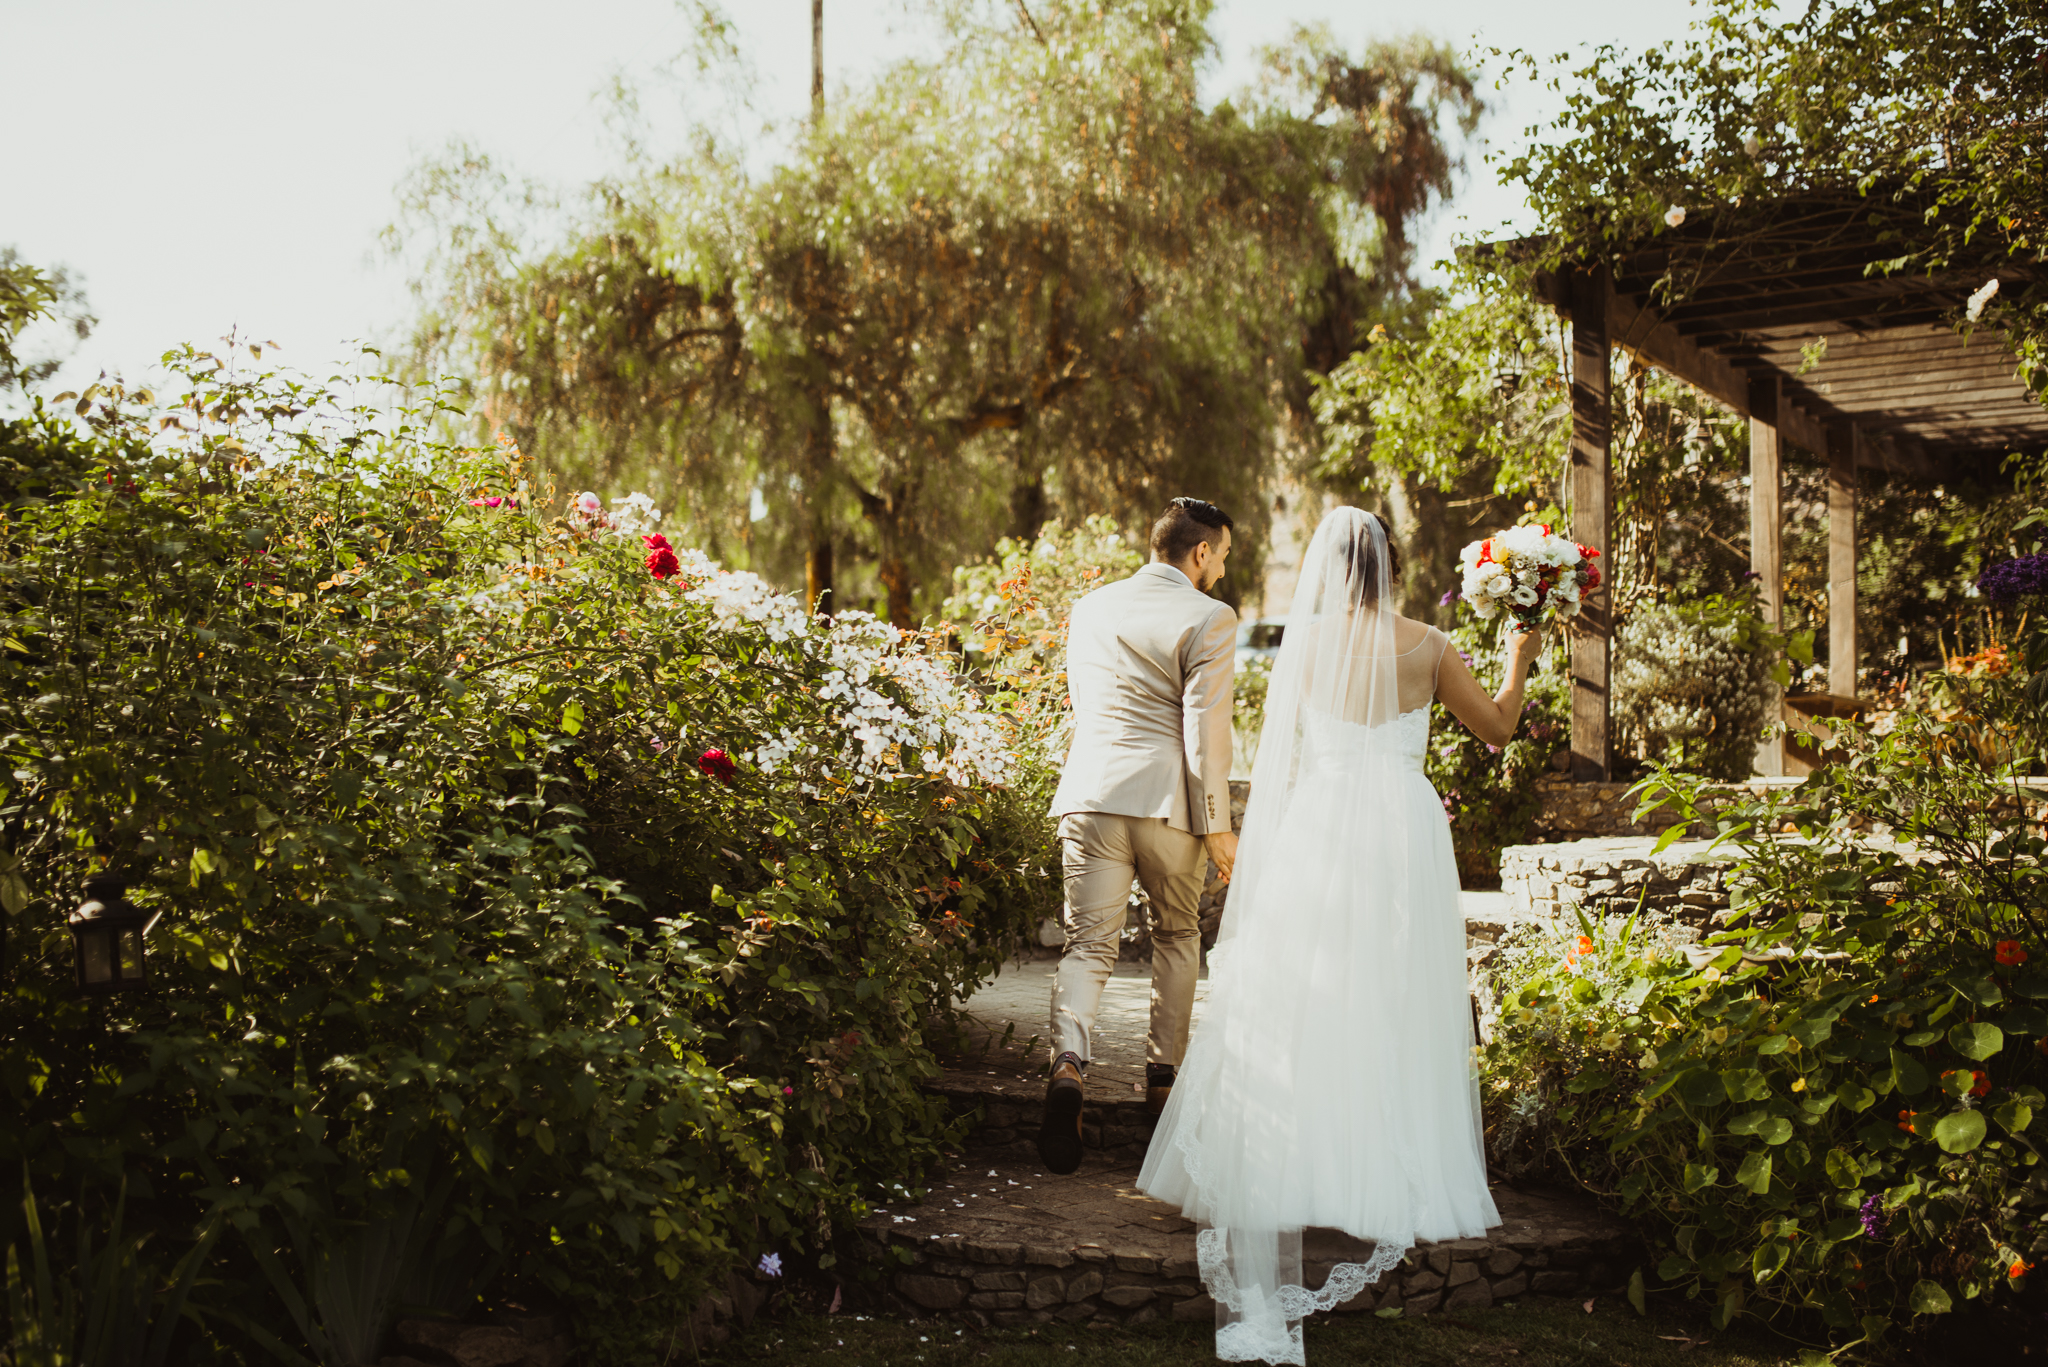 ©Isaiah + Taylor Photography - Brendan + Stefana, Quail Haven Farm Wedding, Vista-109.jpg